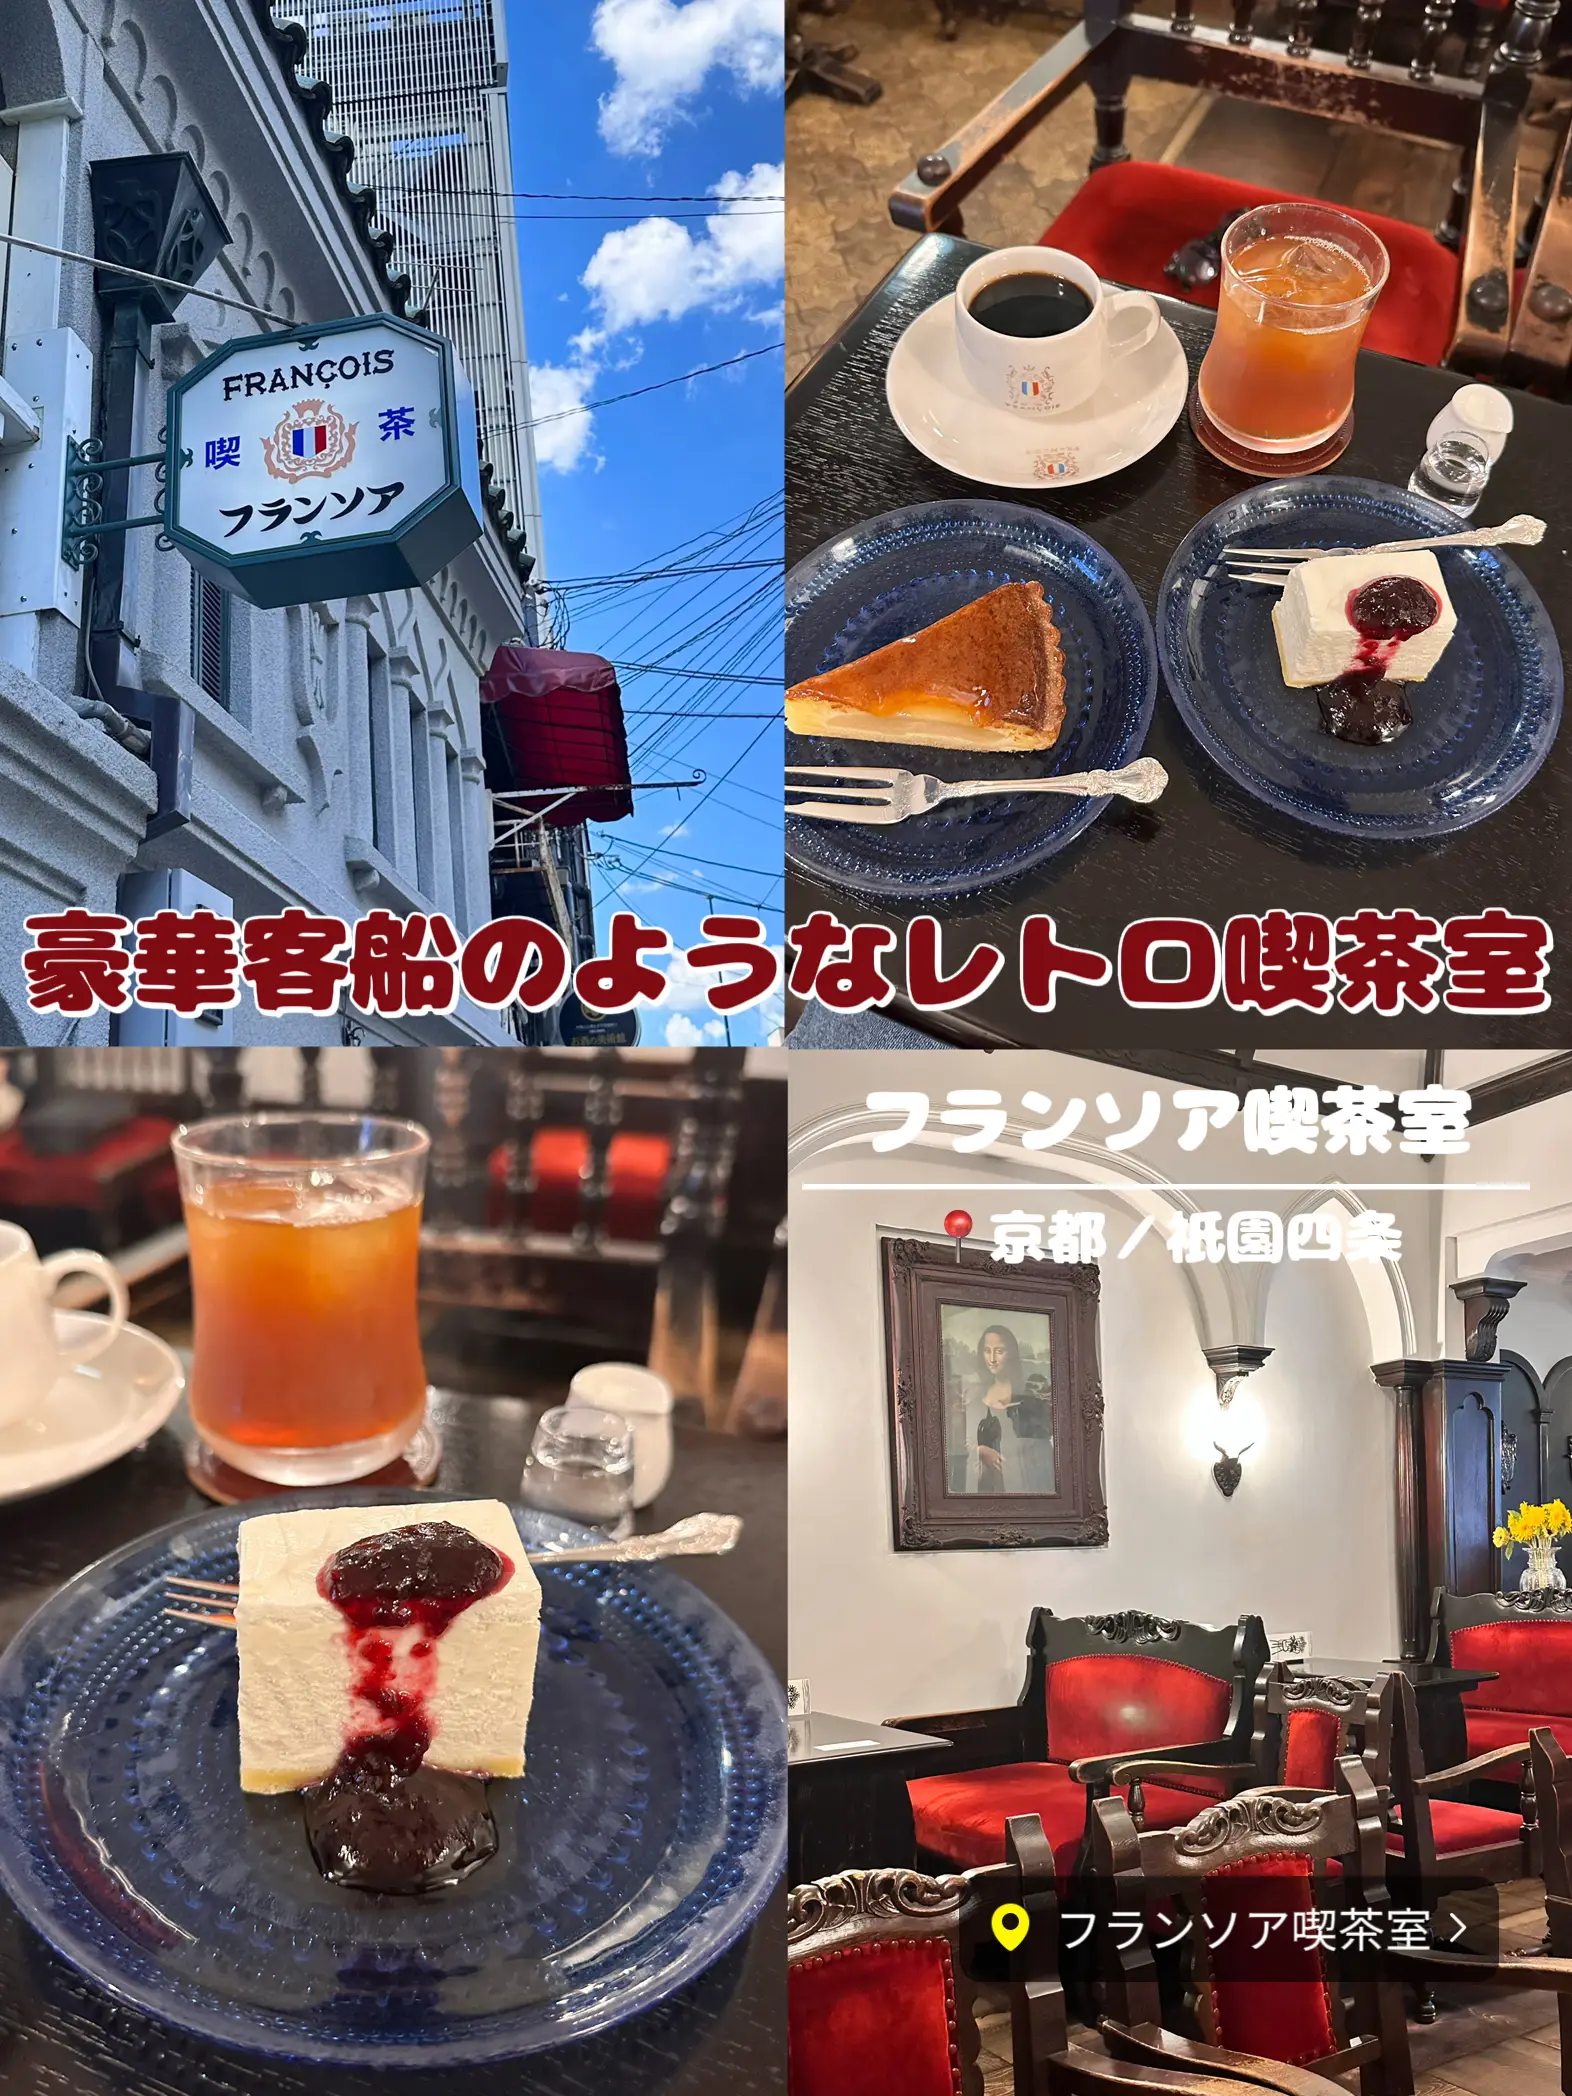 Kyoto Gion Shijo 】 Time slip to Showa!? Retro cafe like a luxury